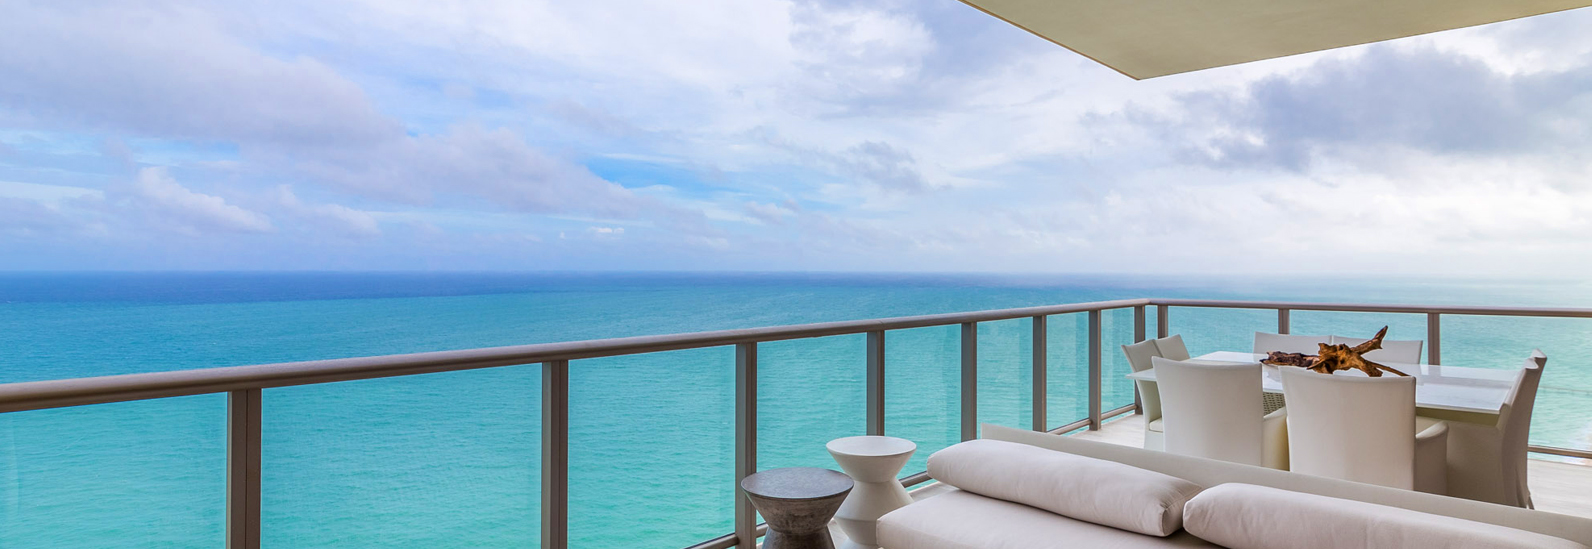 Miami Real Estate Market Anticipating Surge in Brazilian Buyers January 20, 2016